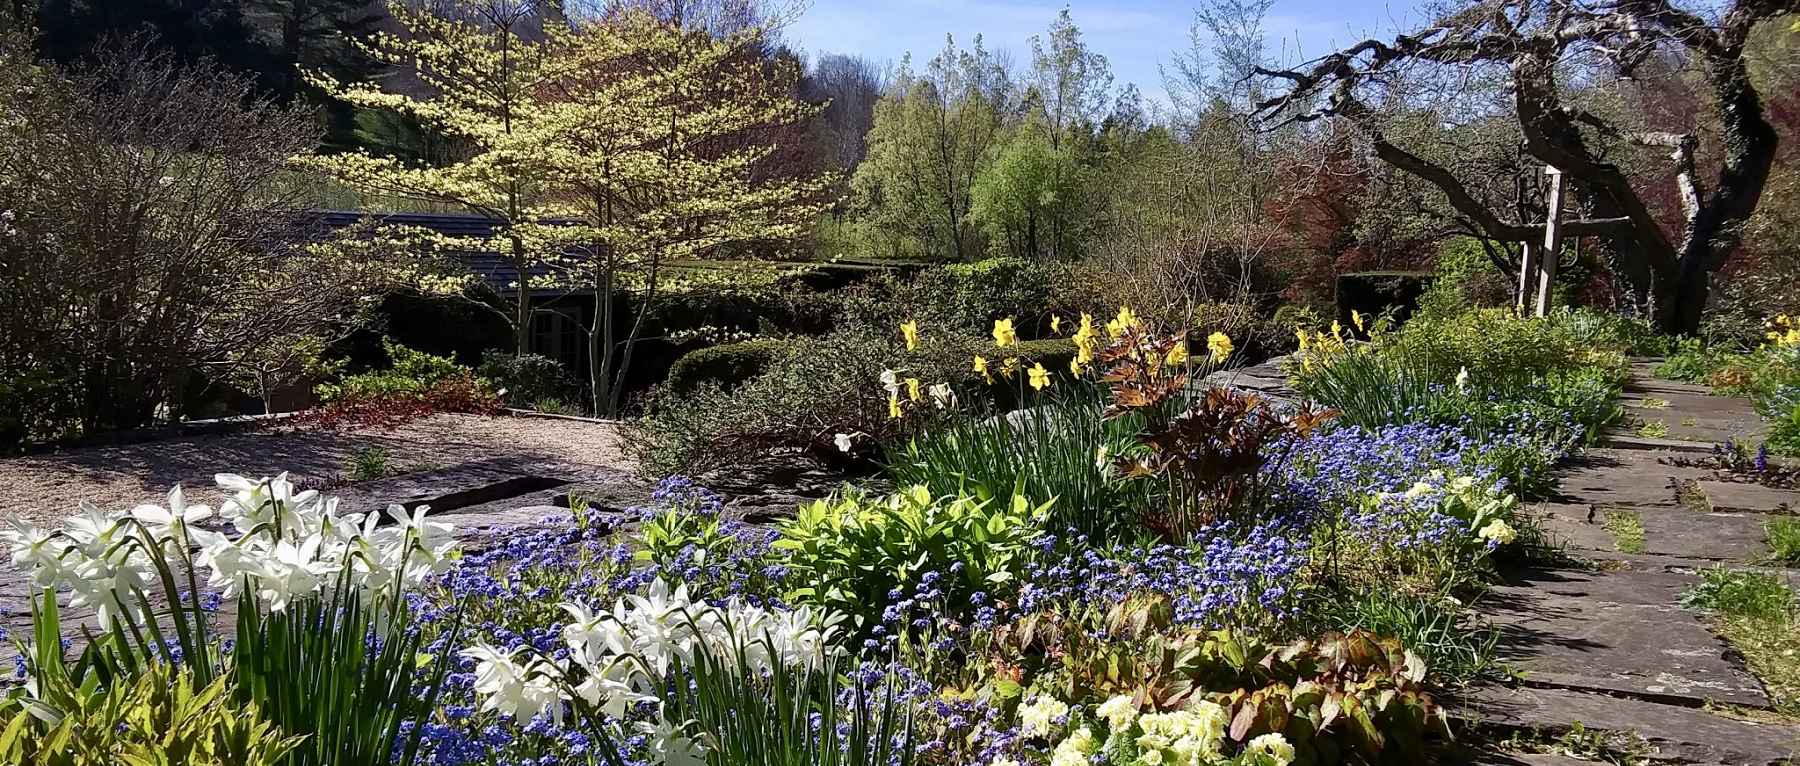 Spring Bloom at Hollister House Garden in Washington, CT